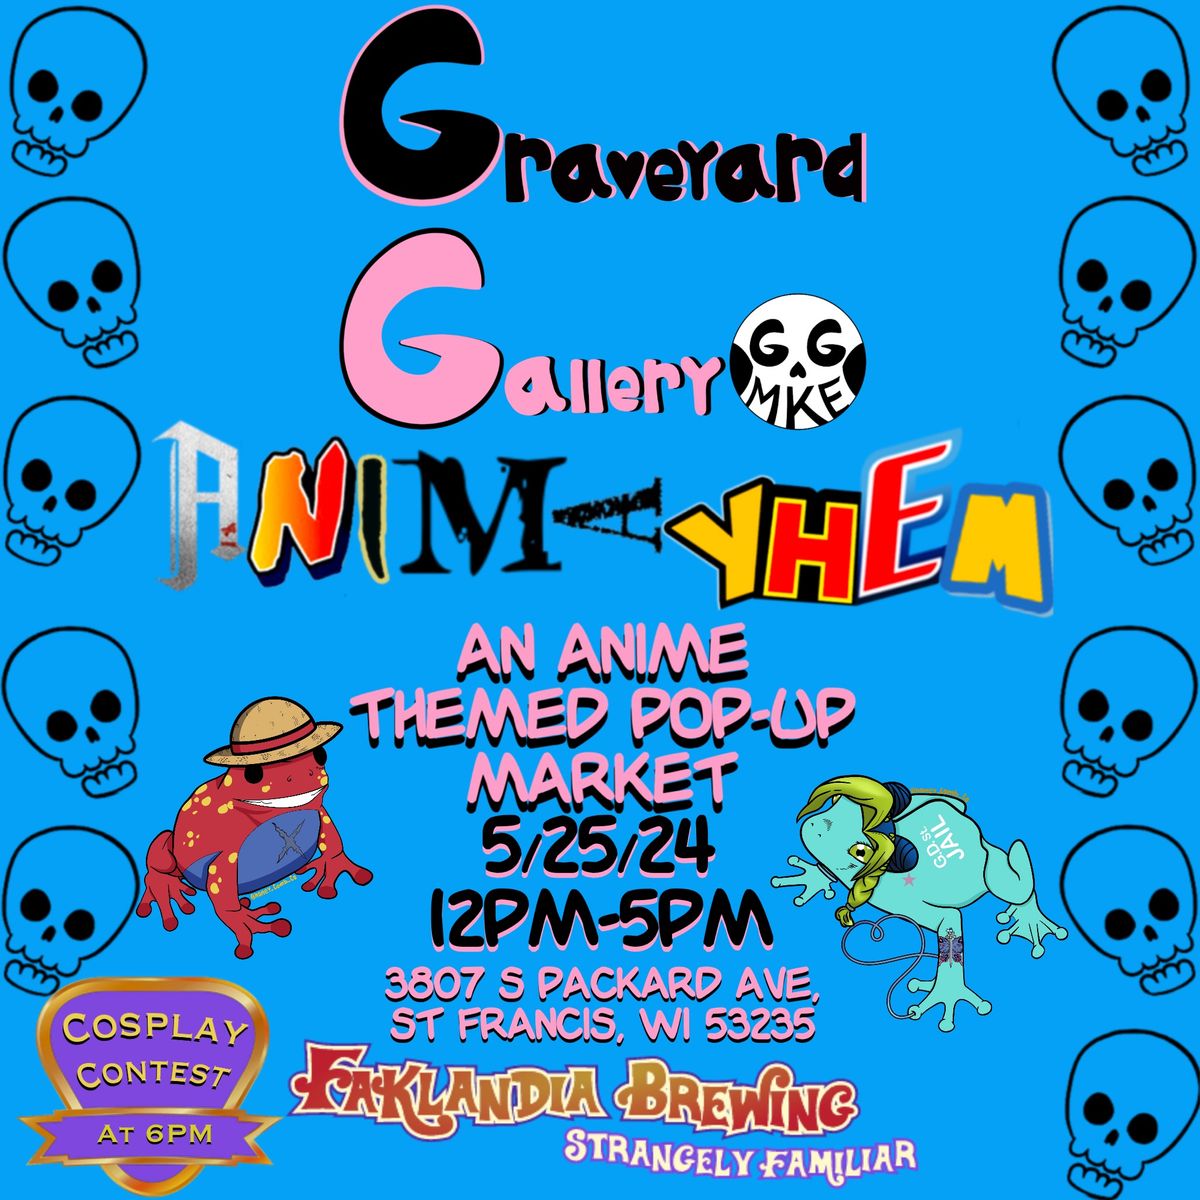 Graveyard Gallery - AniMAYhem